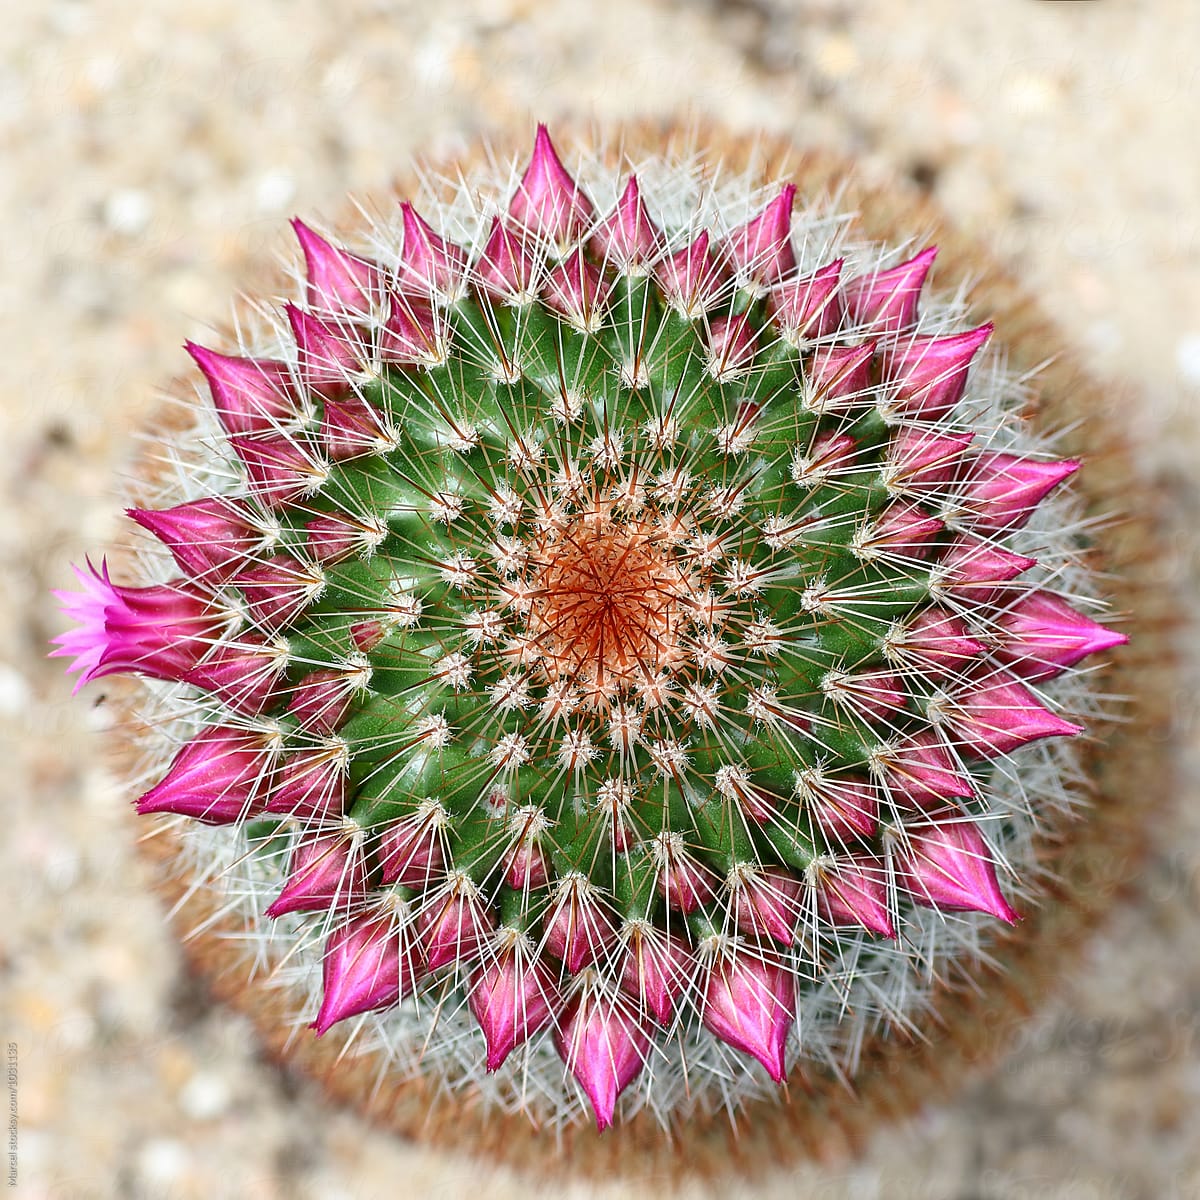 Flowering cactus top